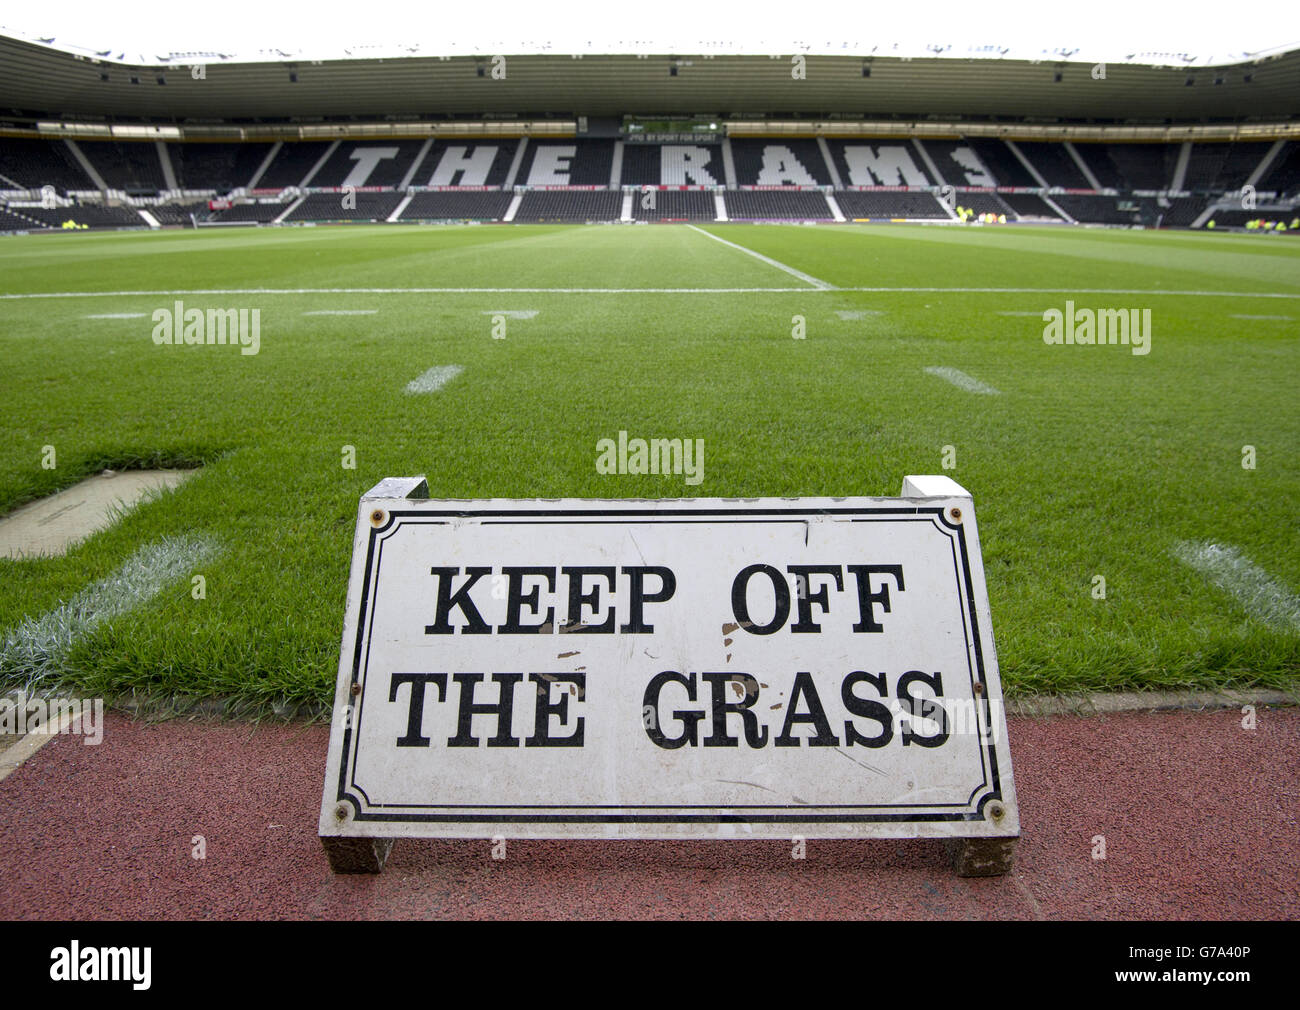 Calcio - Campionato Sky Bet - Derby County / Rotherham United - iPro Stadium. Un cartello "Keep Off the Grass" sul campo all'iPro Stadium Foto Stock